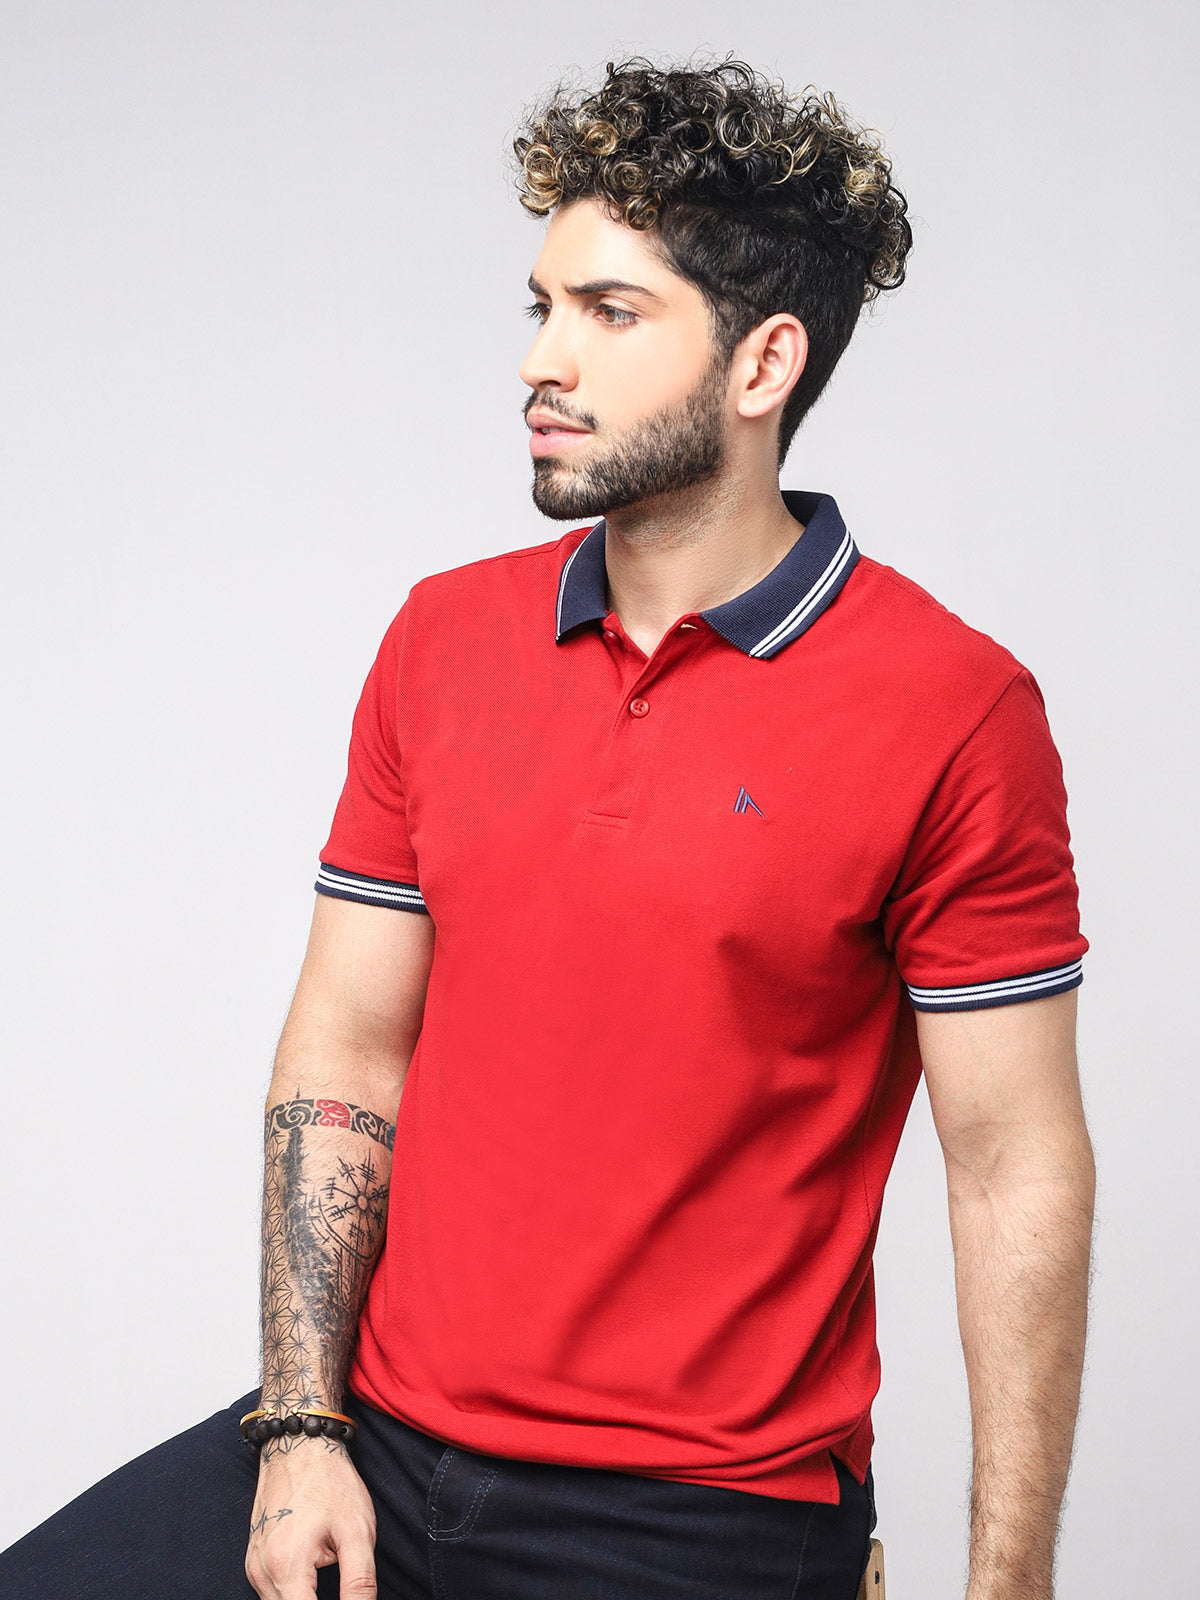 Men's Red Polo Shirt - FMTCP20-001